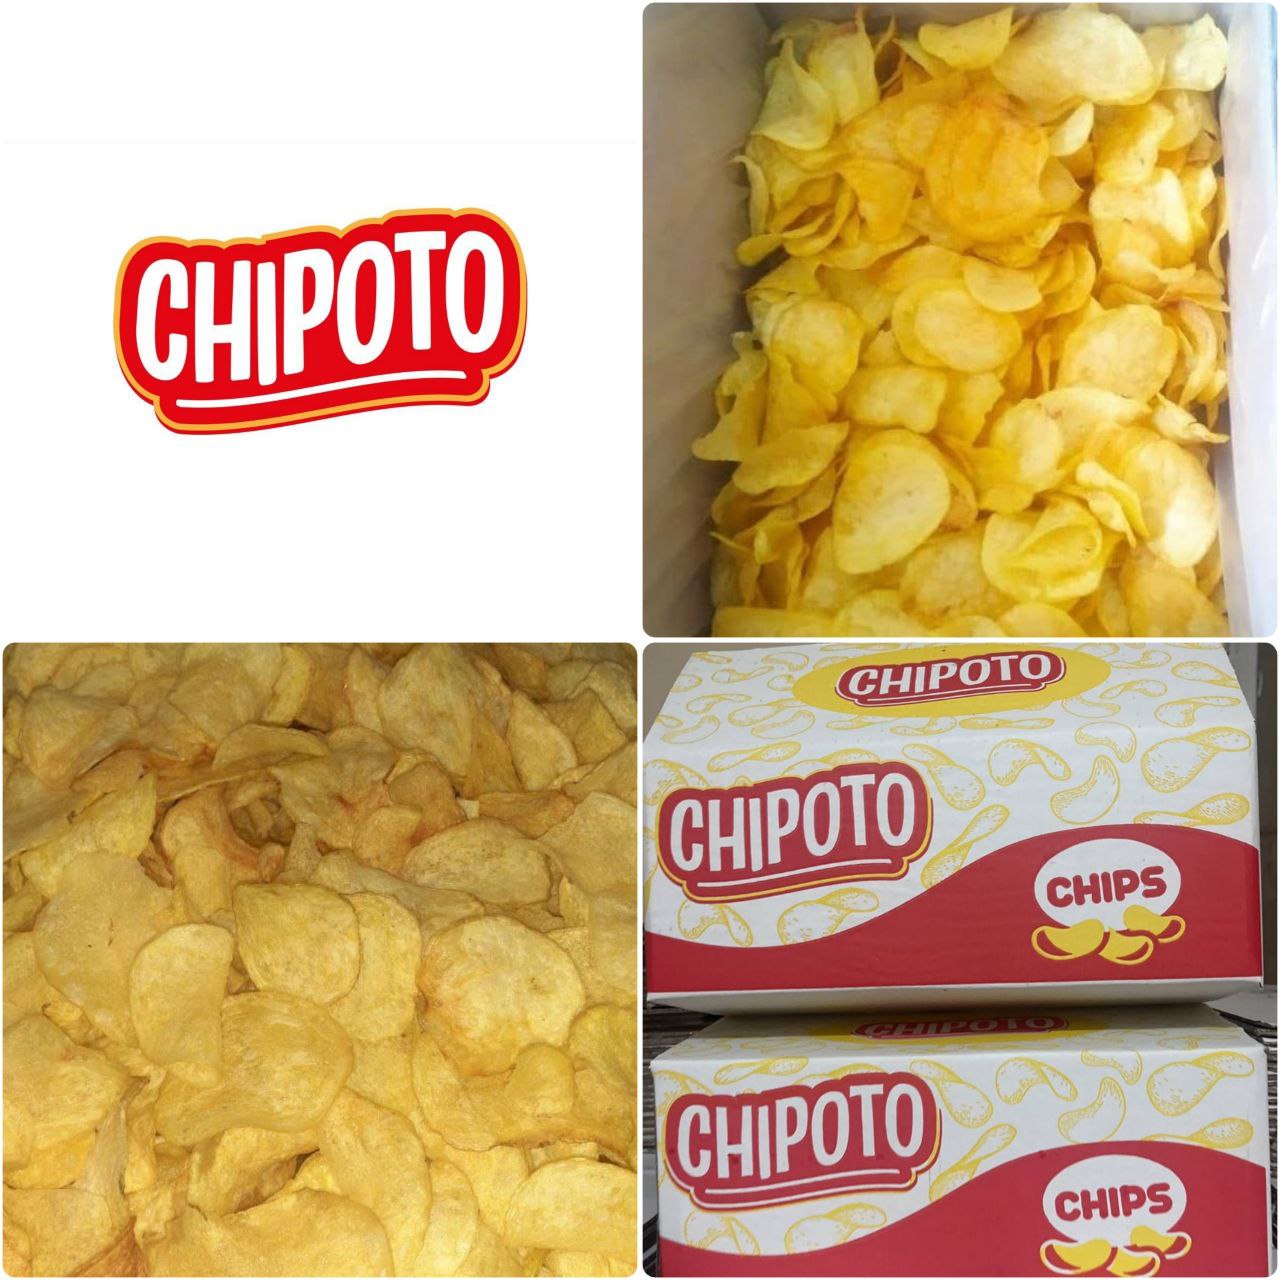 Chipoto chips